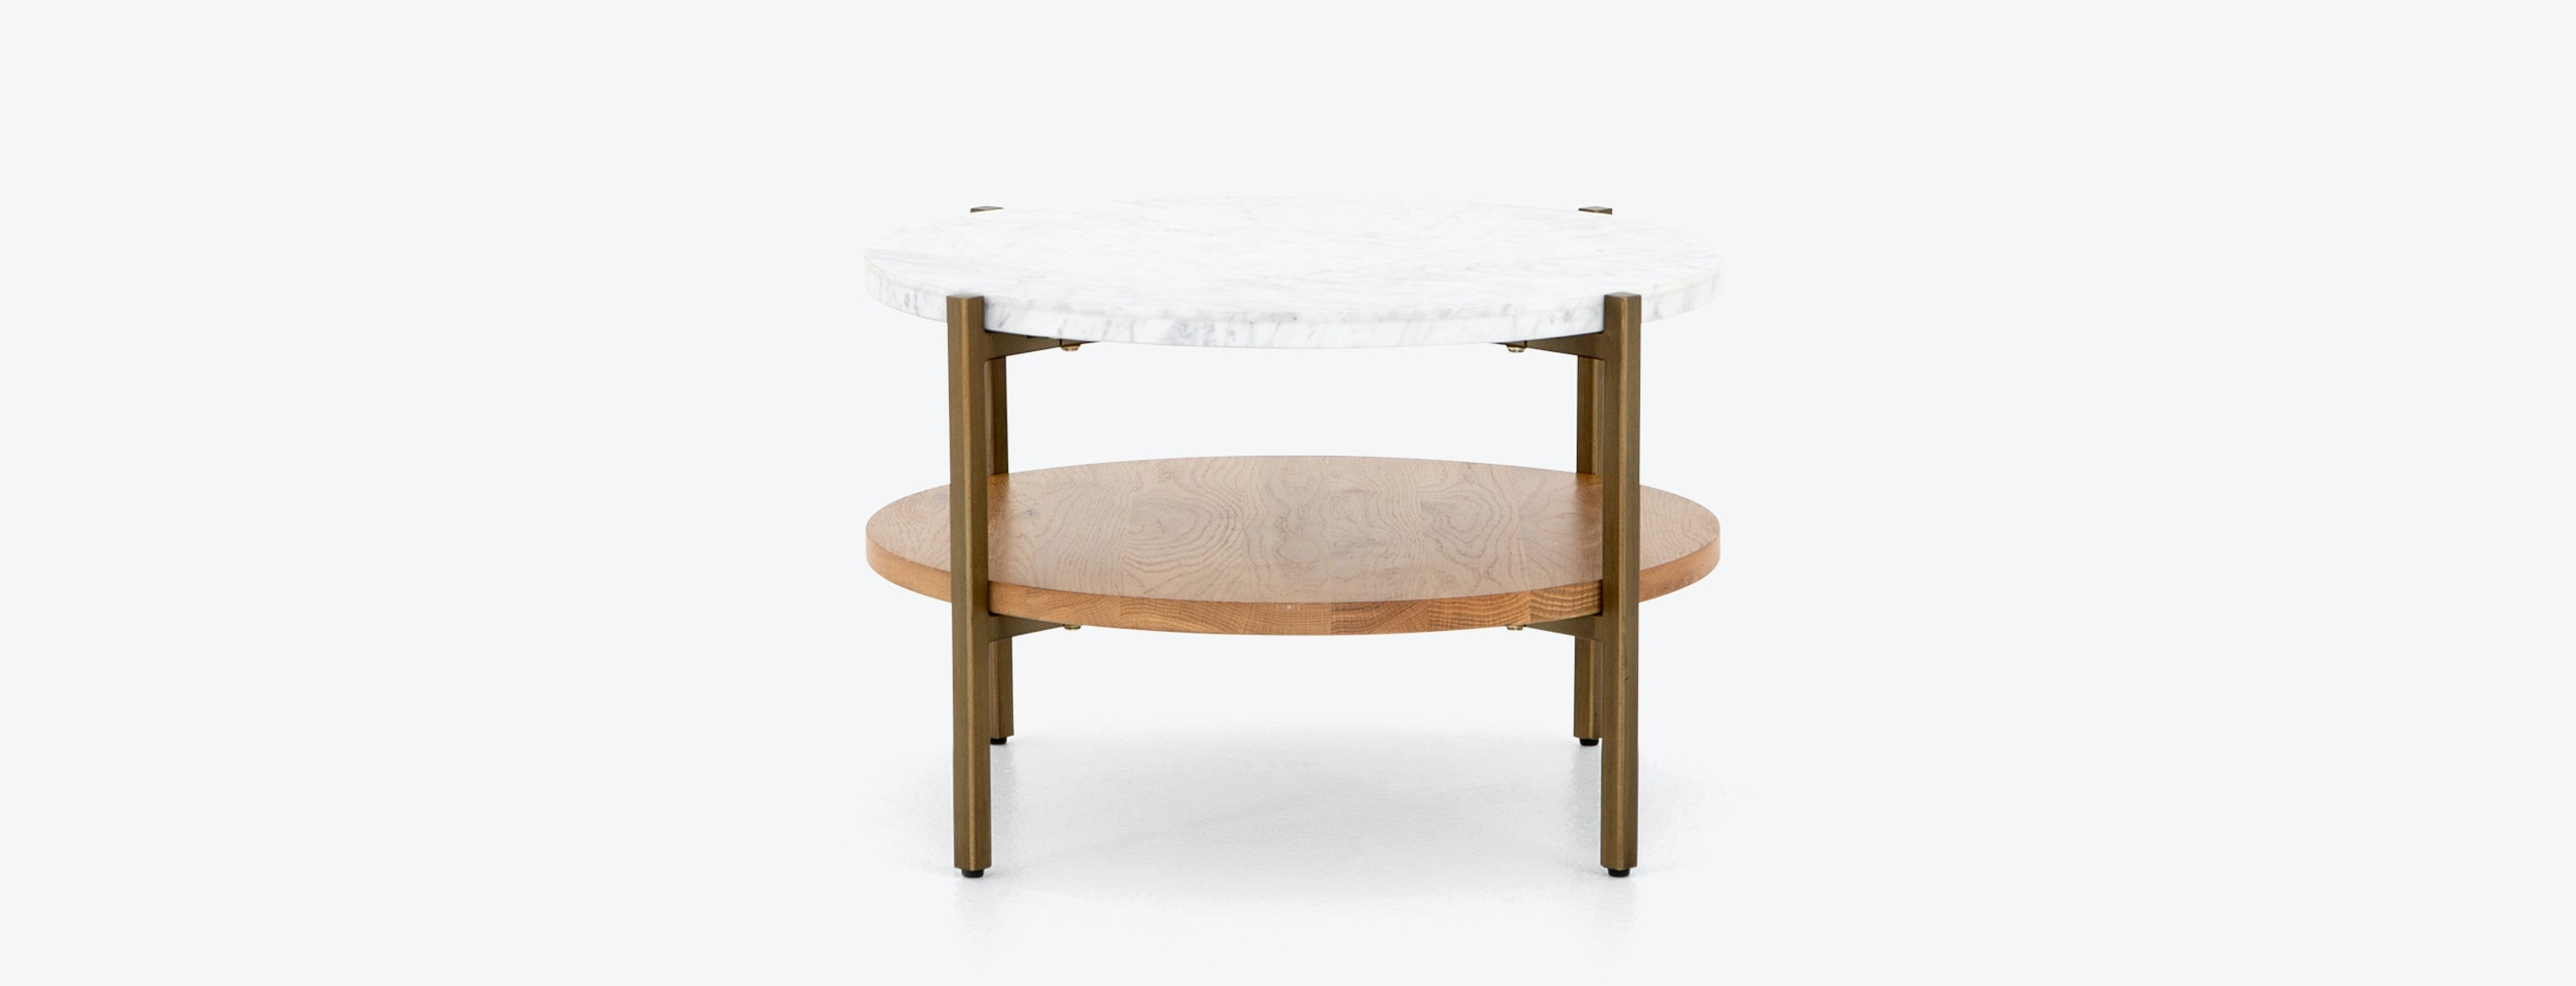 Savi Coffee Table - Image 1